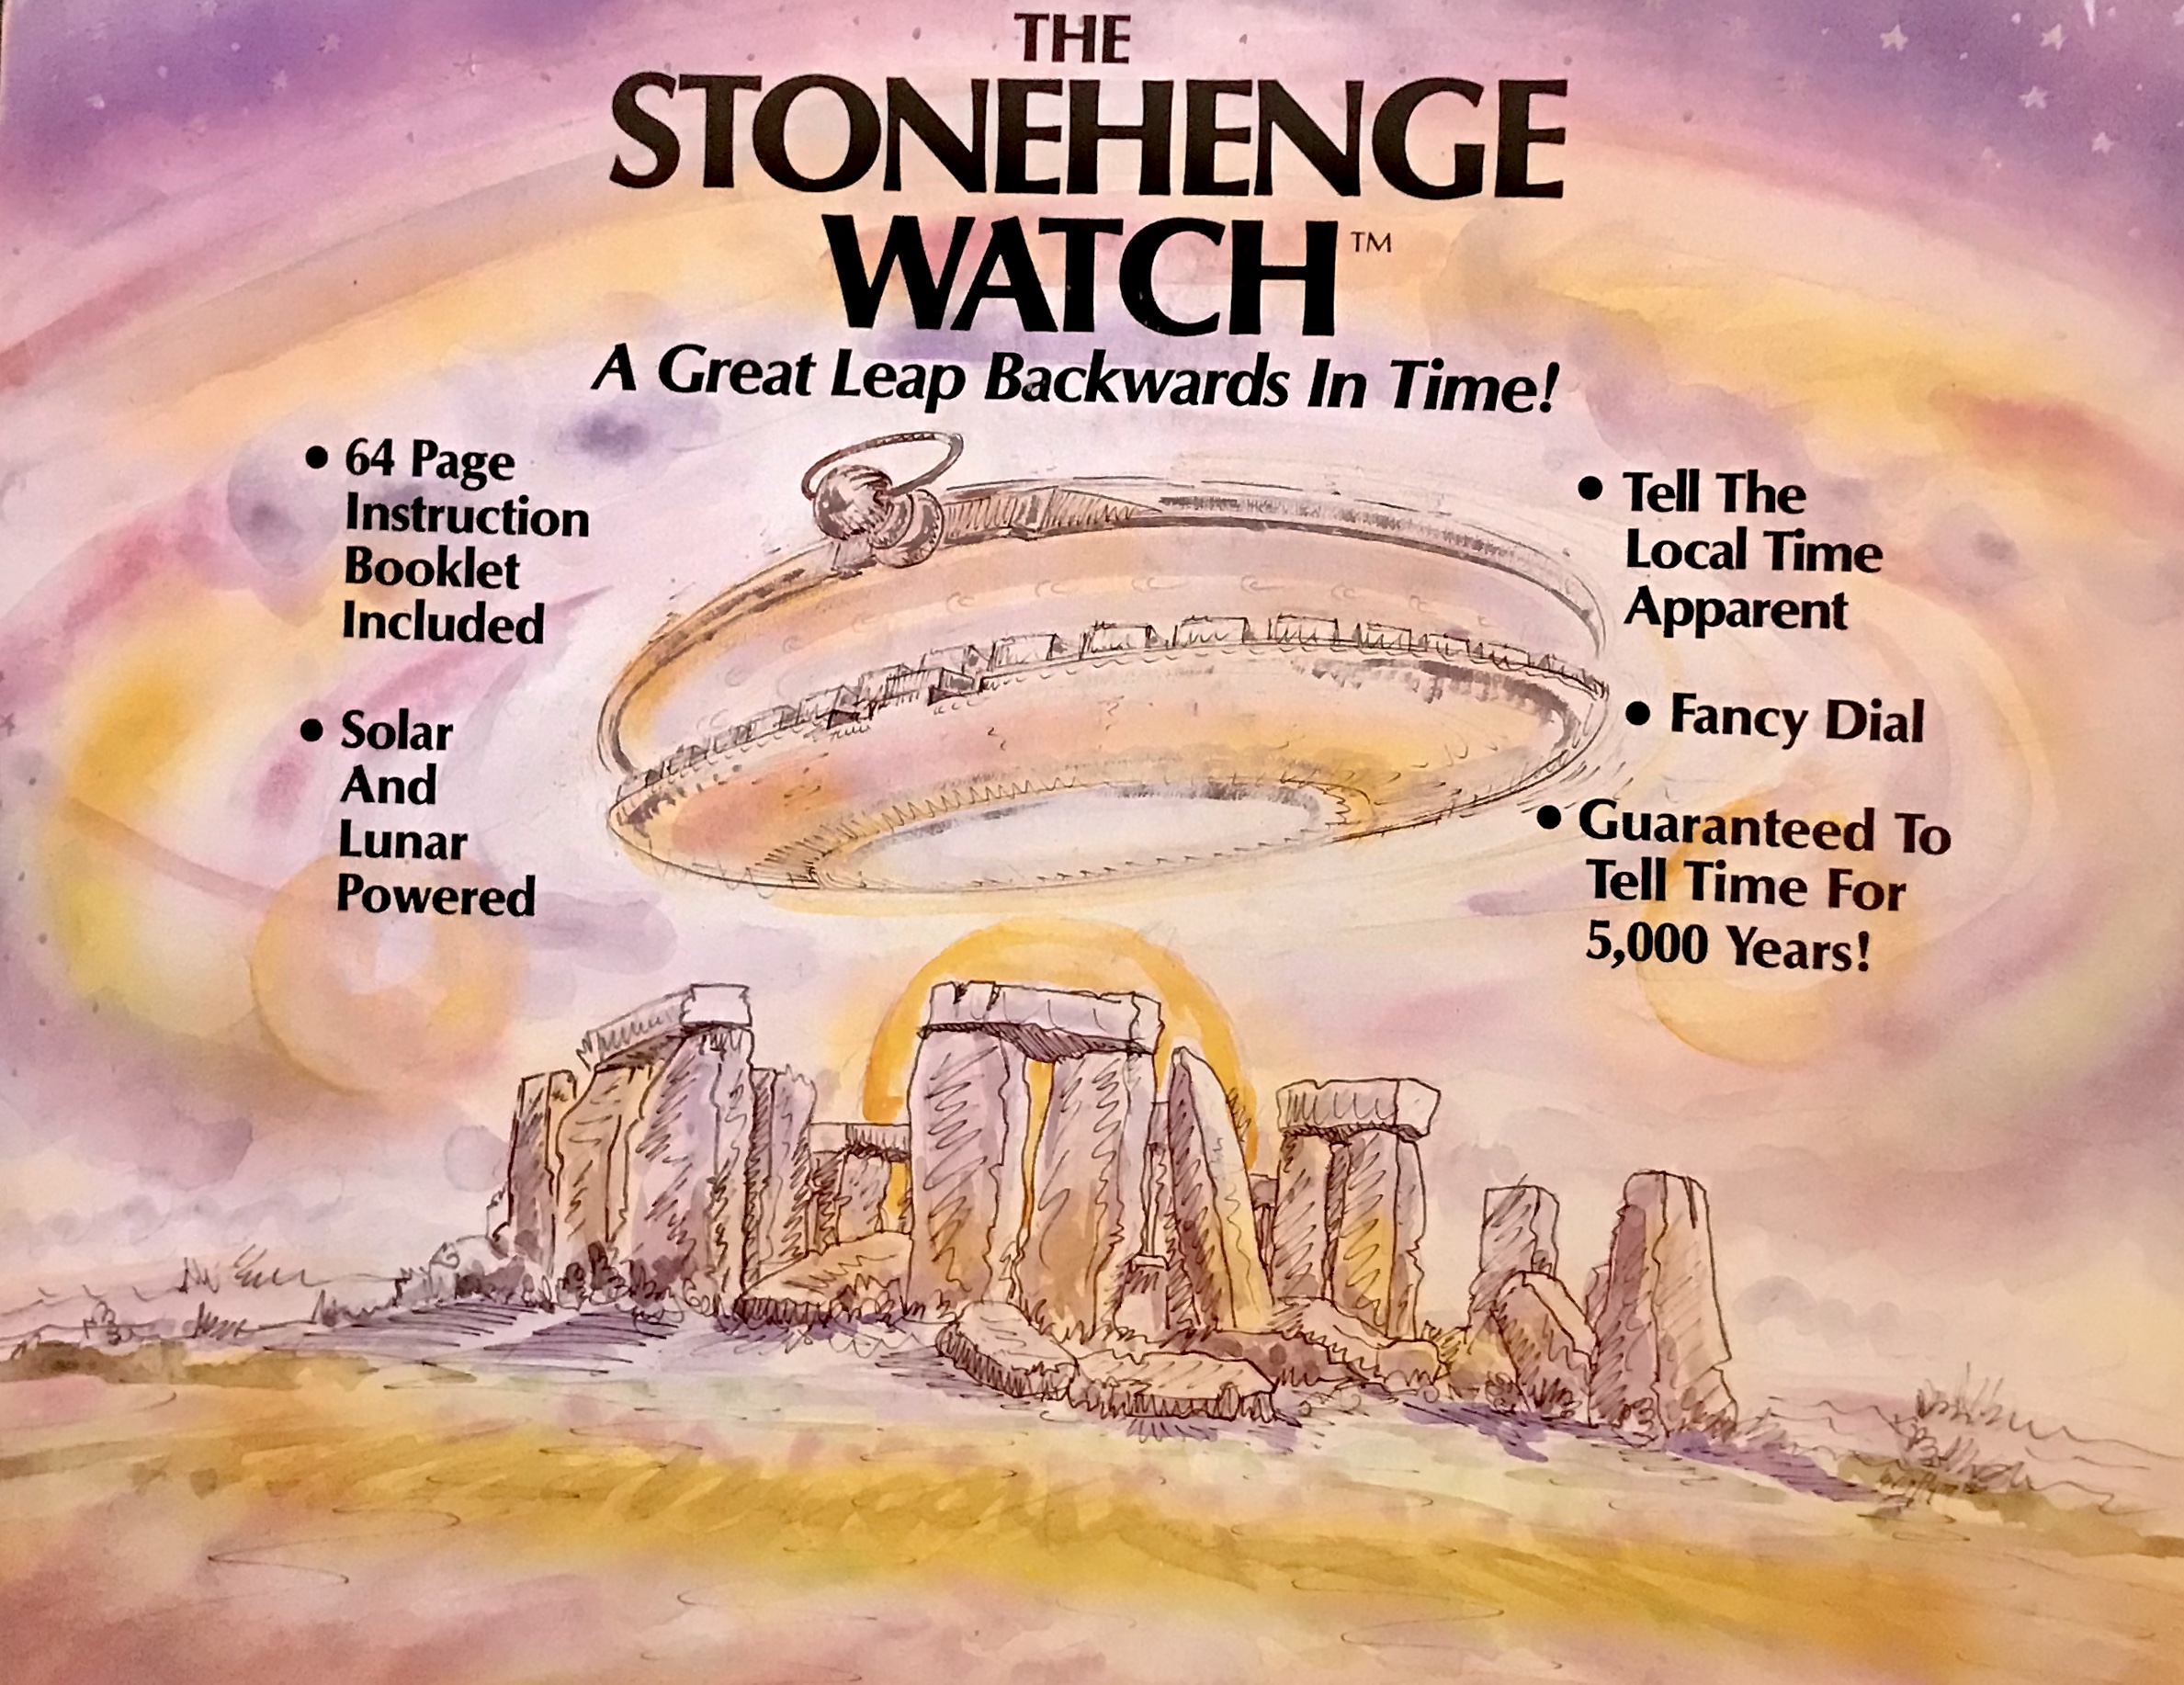 The Stonehenge Watch hovers over Stonehenge!